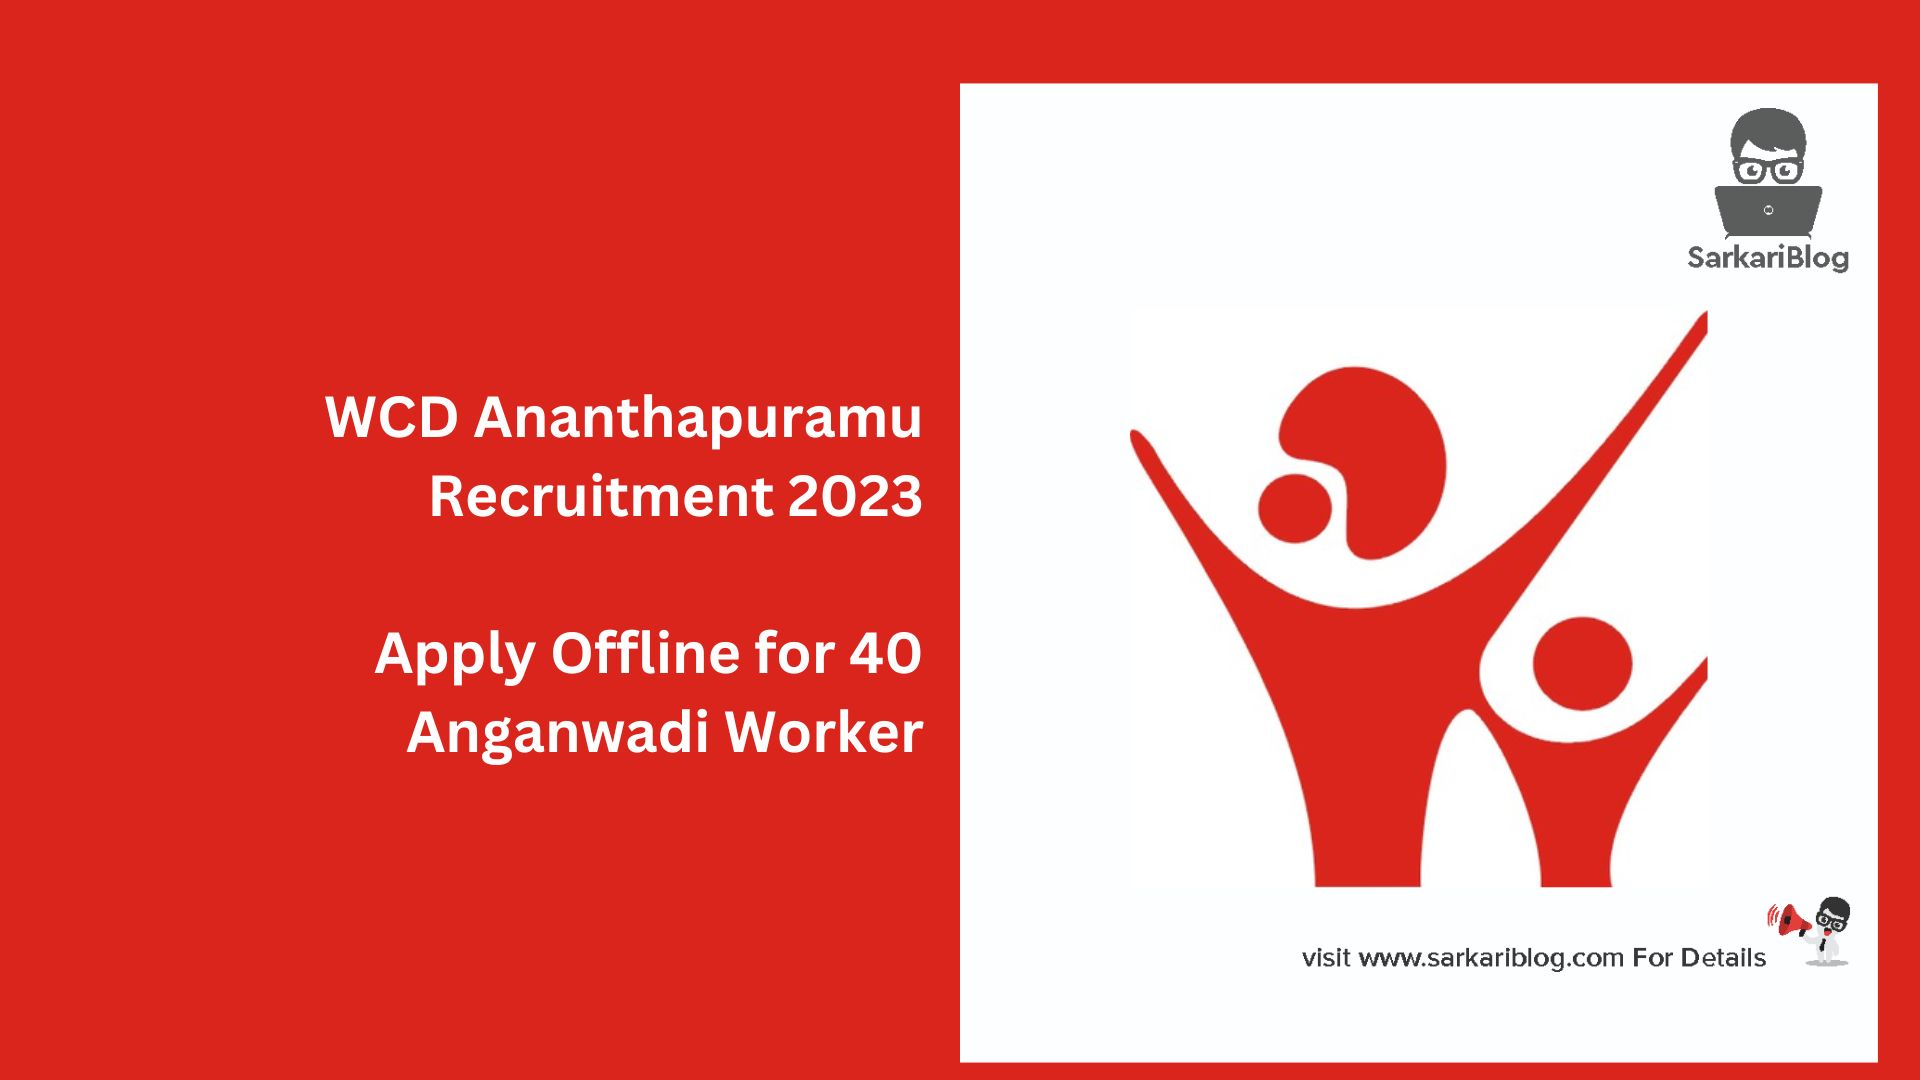 WCD Ananthapuramu Recruitment 2023